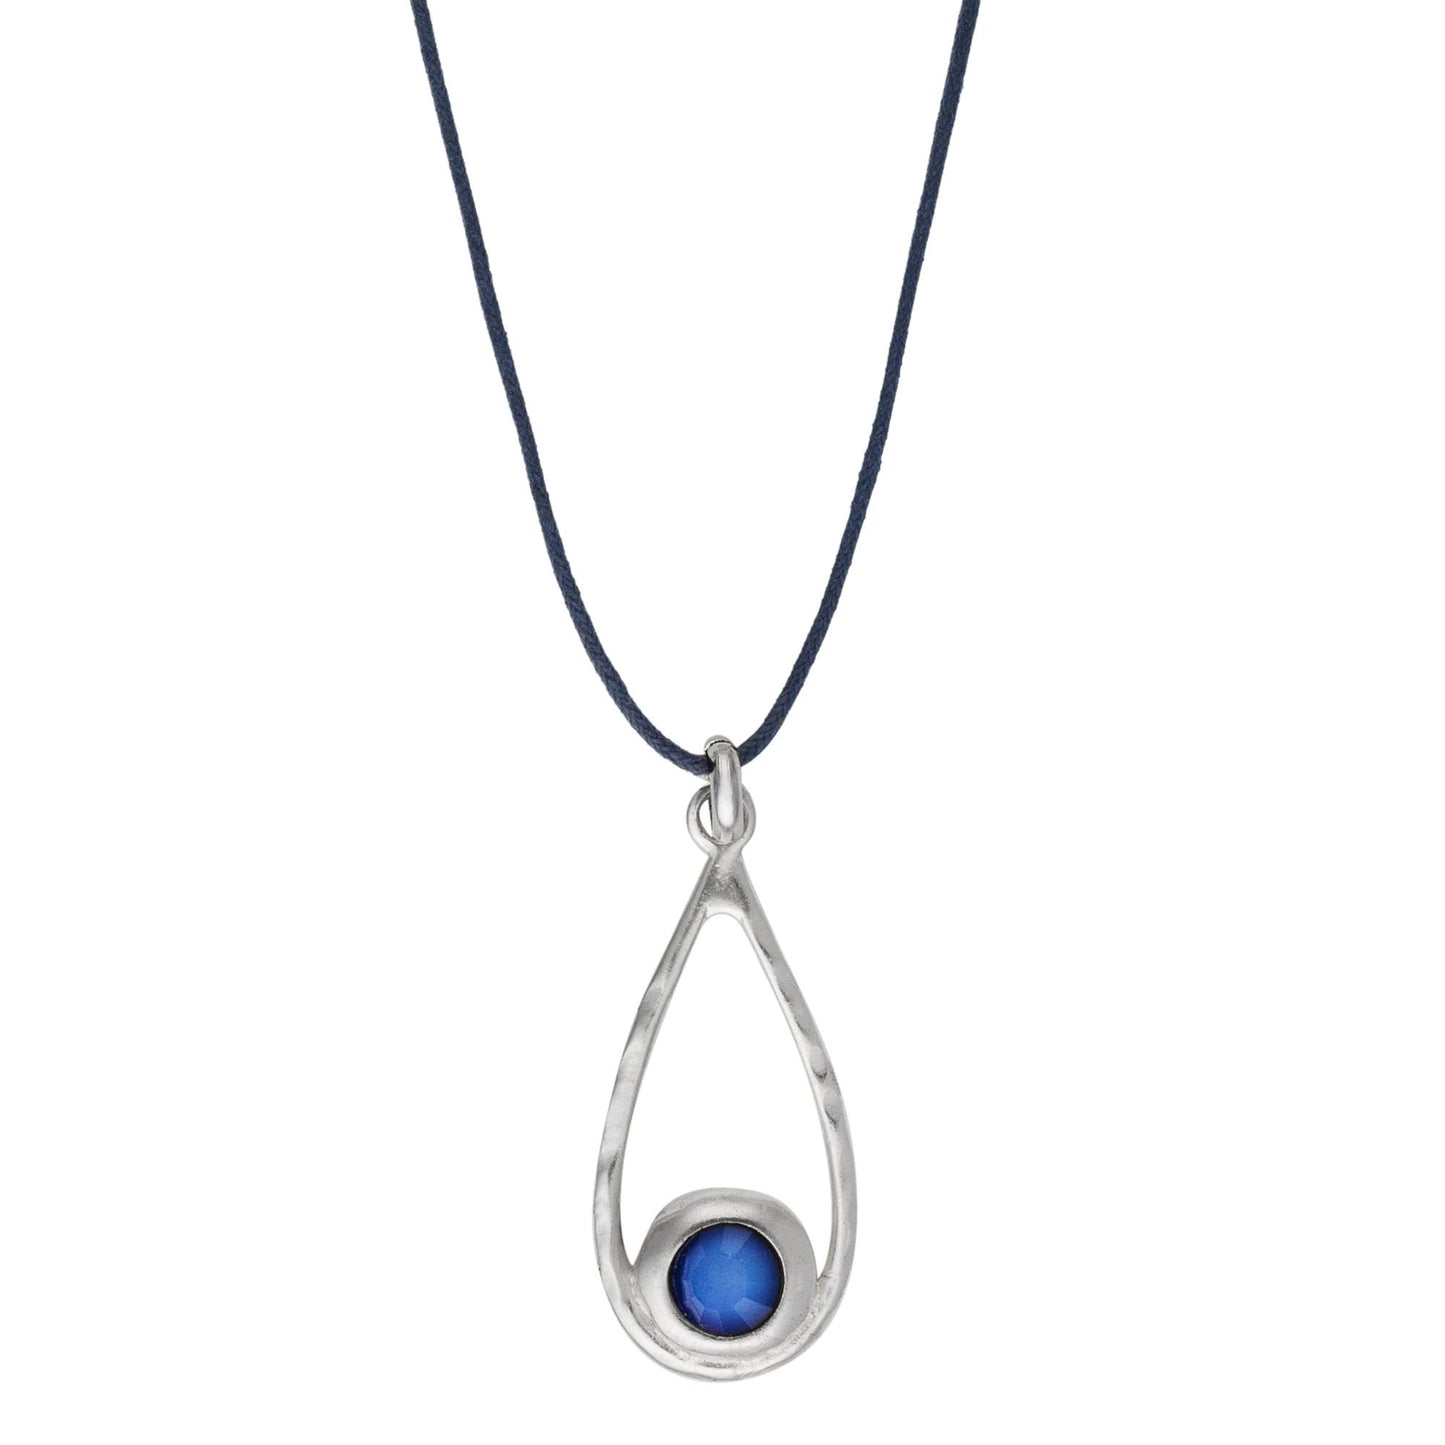 Lagrima and Swarovski necklace in blue